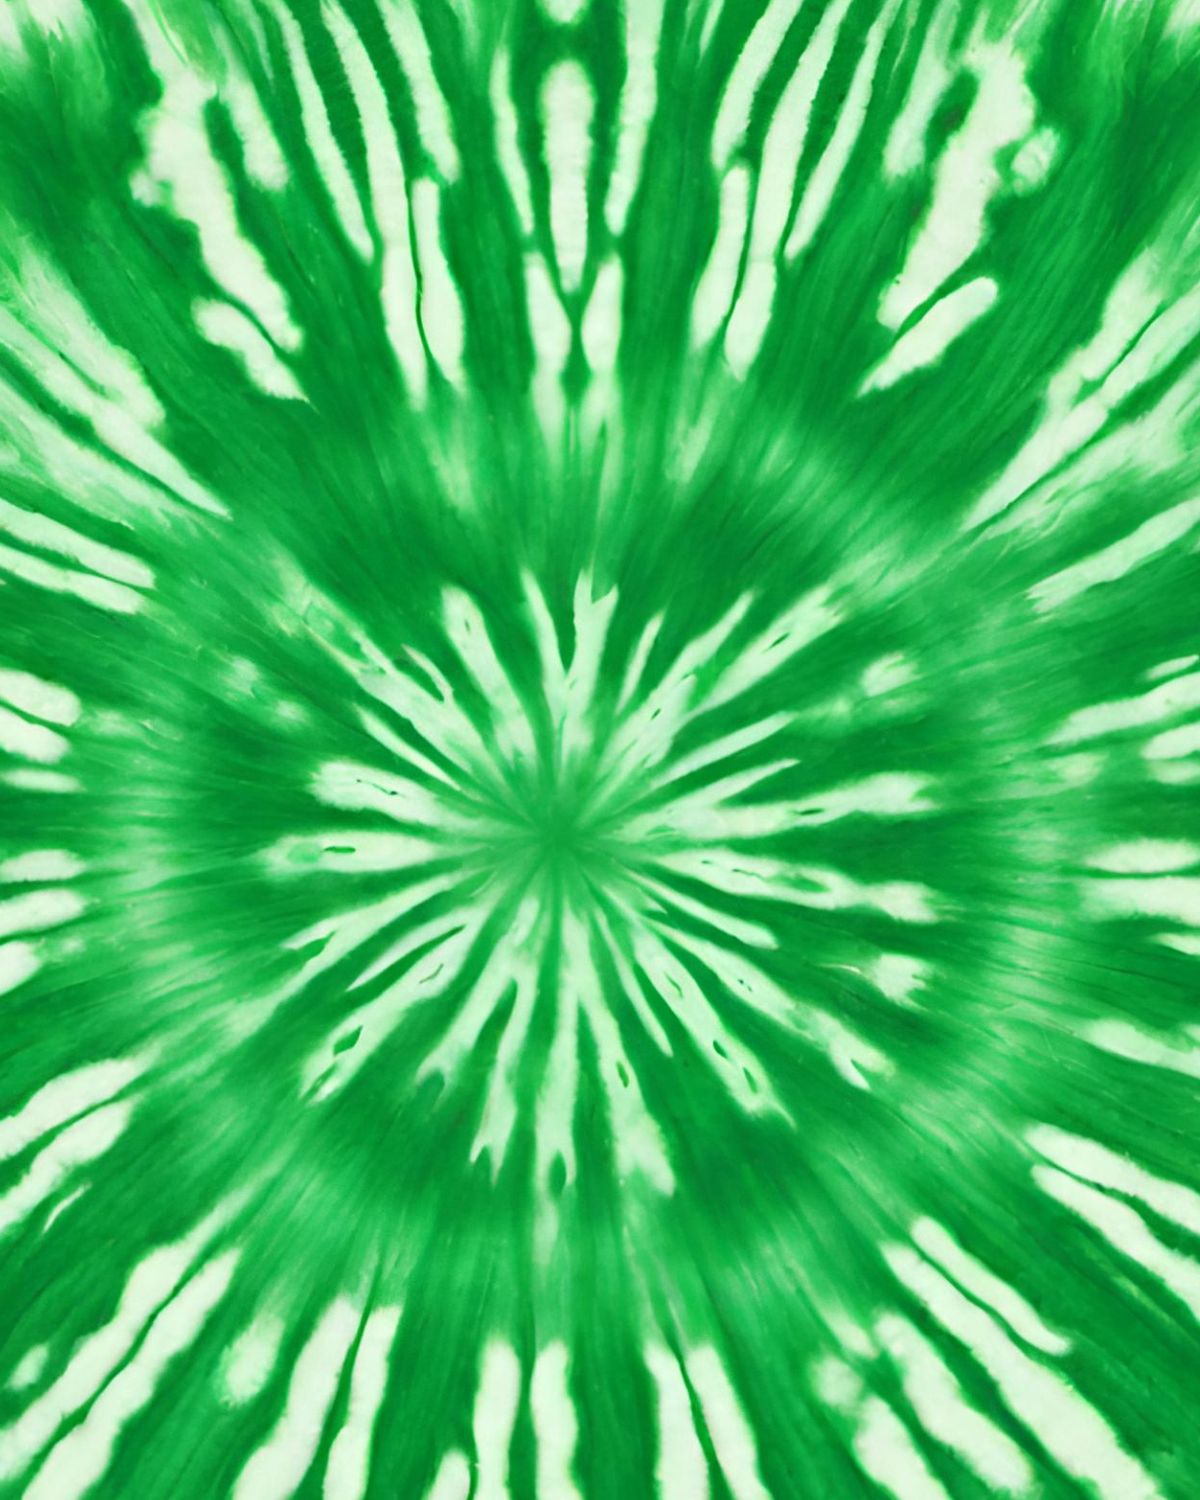 image of green tie dye fabric.